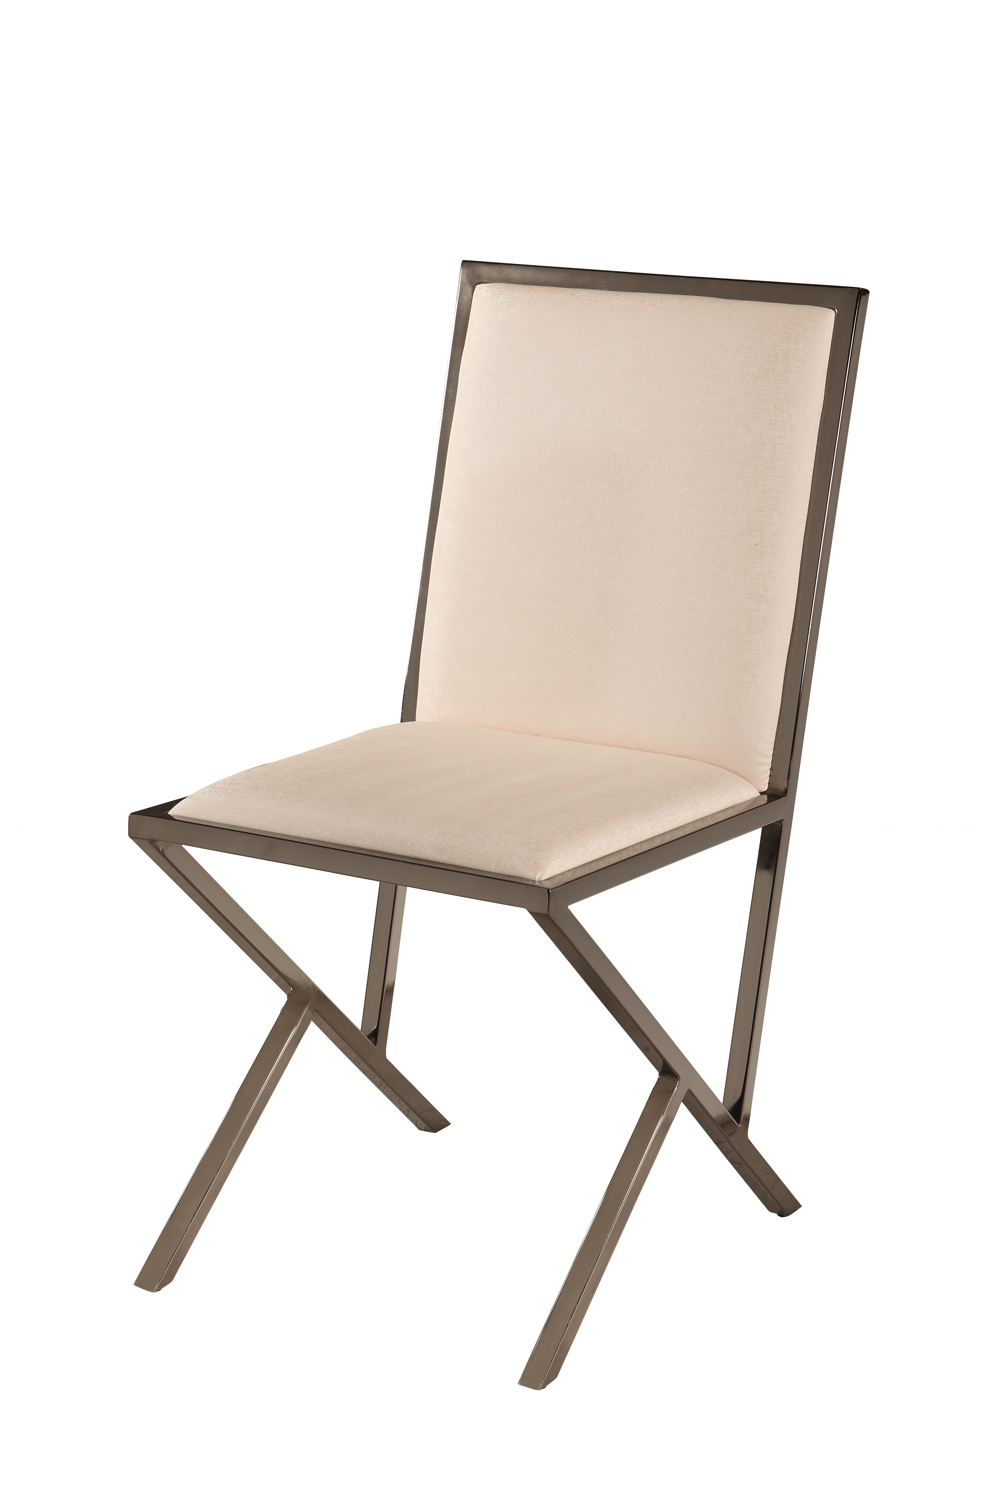 Chintaly Imports Lauren Modern Side Chair - Beige/Gloss Black Nickel